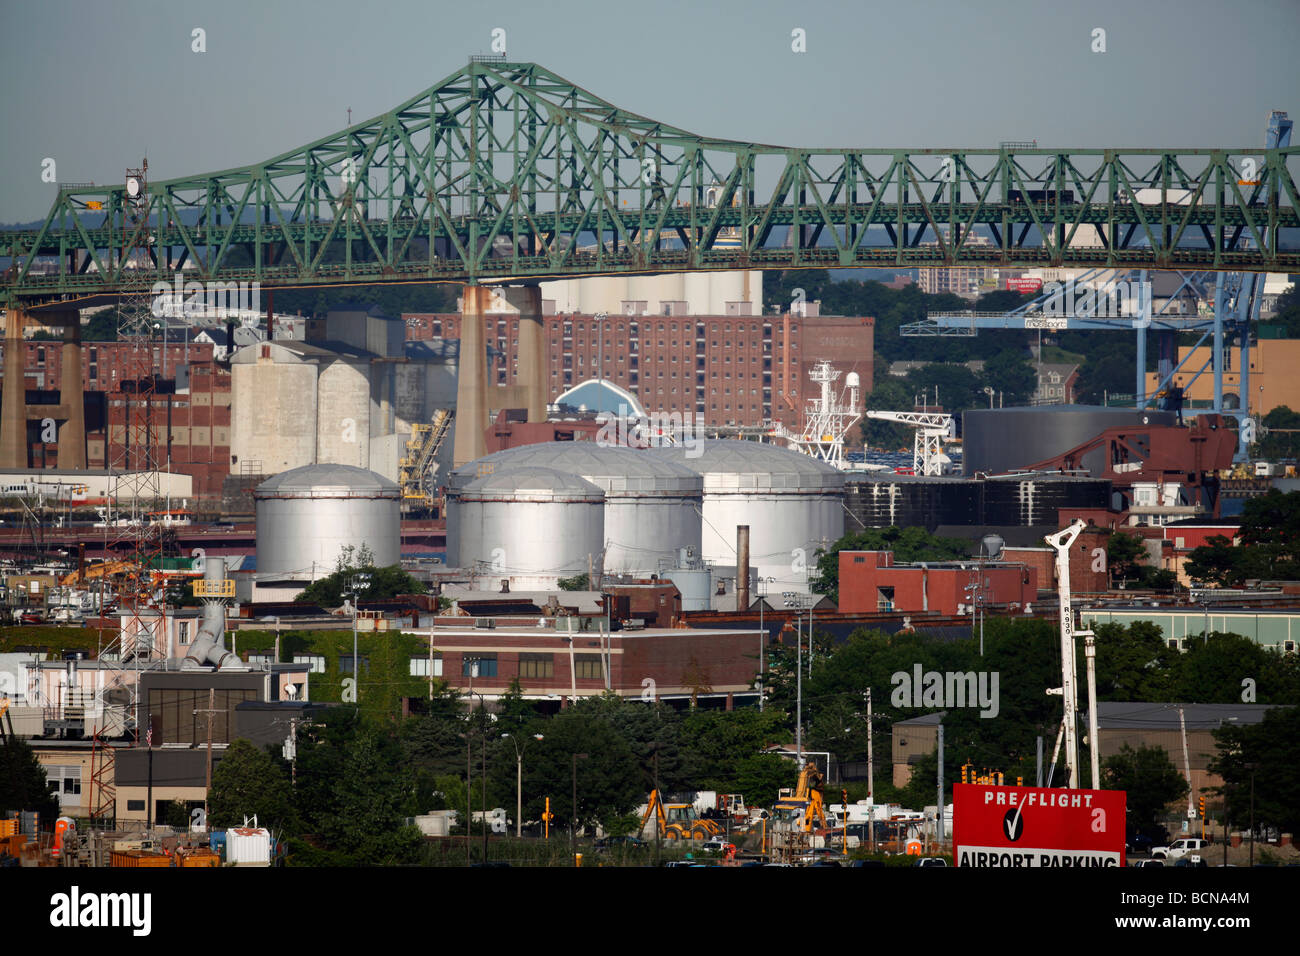 Fuel oil storage tanks, Tobin Bridge, Boston, Massachusetts Stock Photo